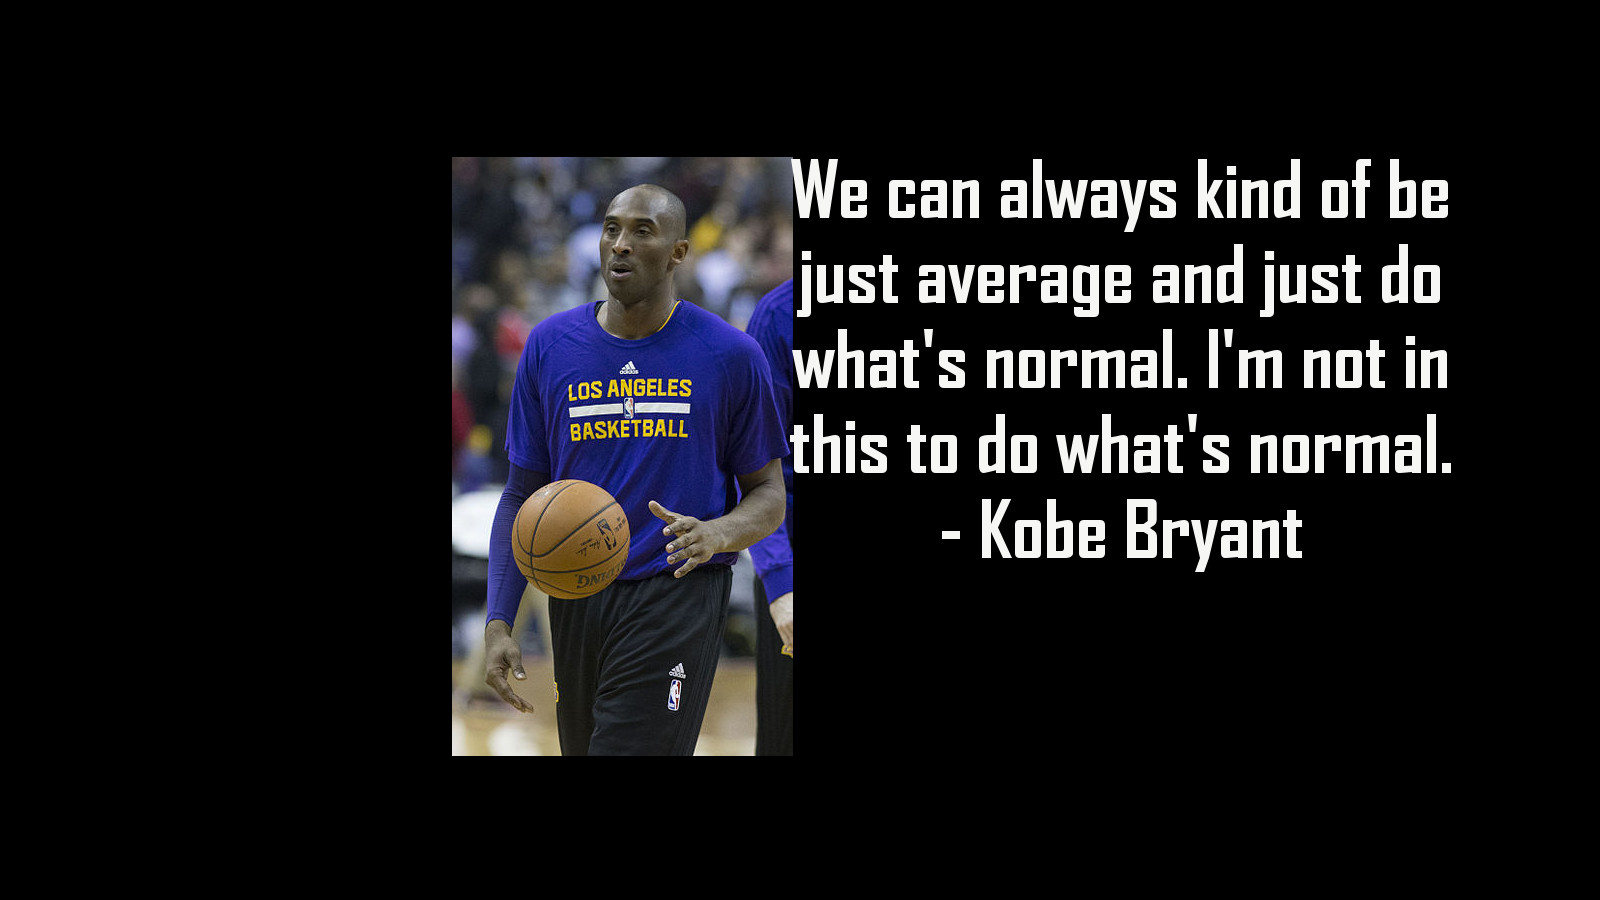 Kobe Bryant image with quote